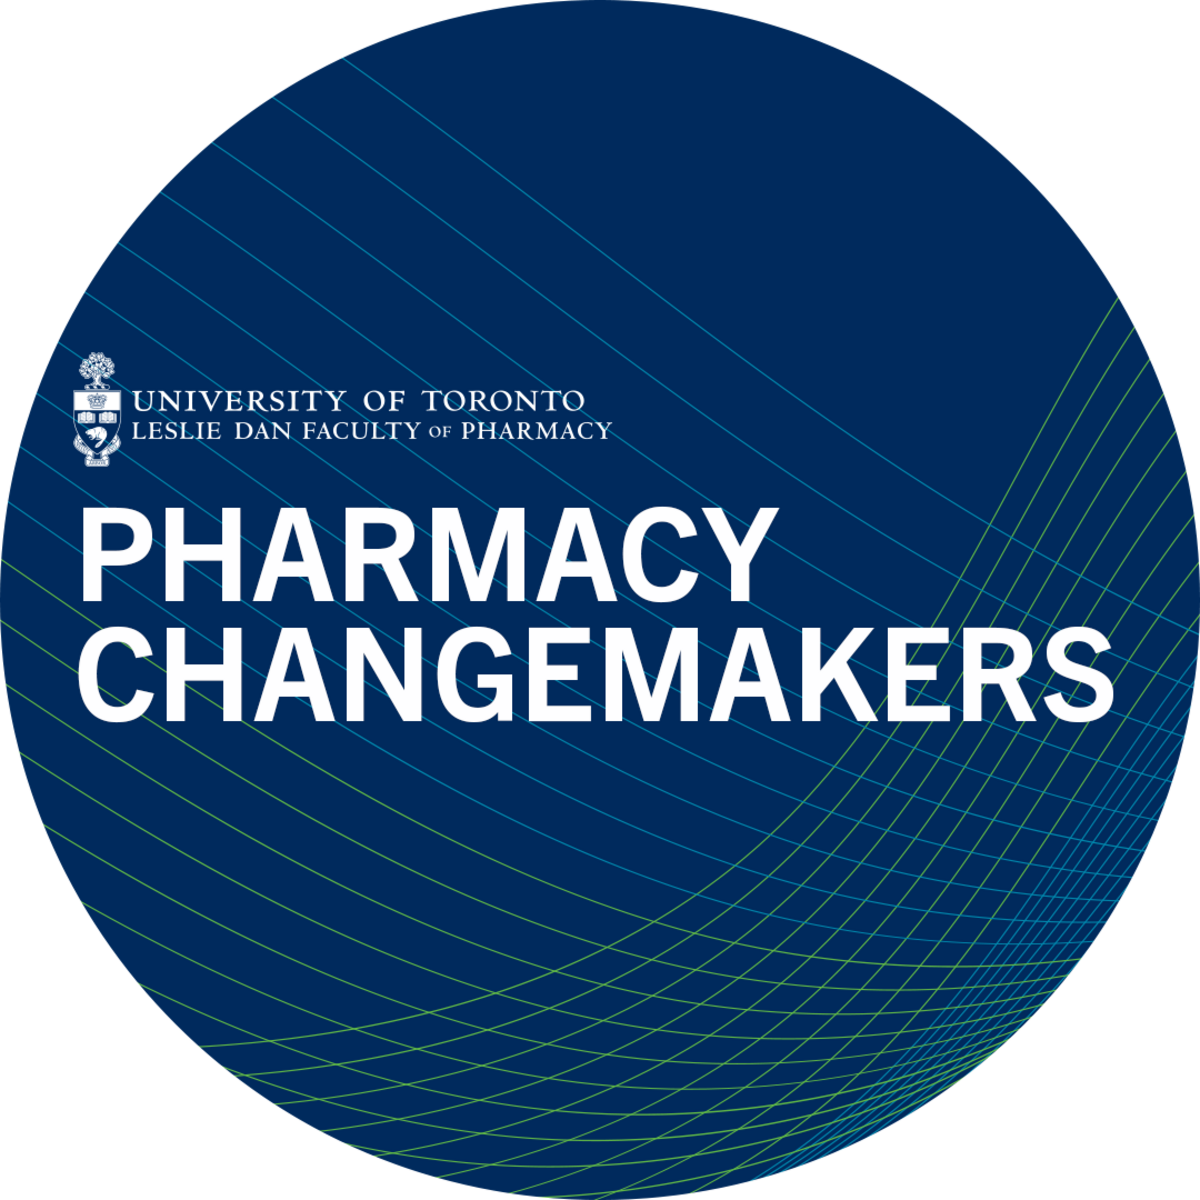 Pharmacy Changemakers CTA circular image